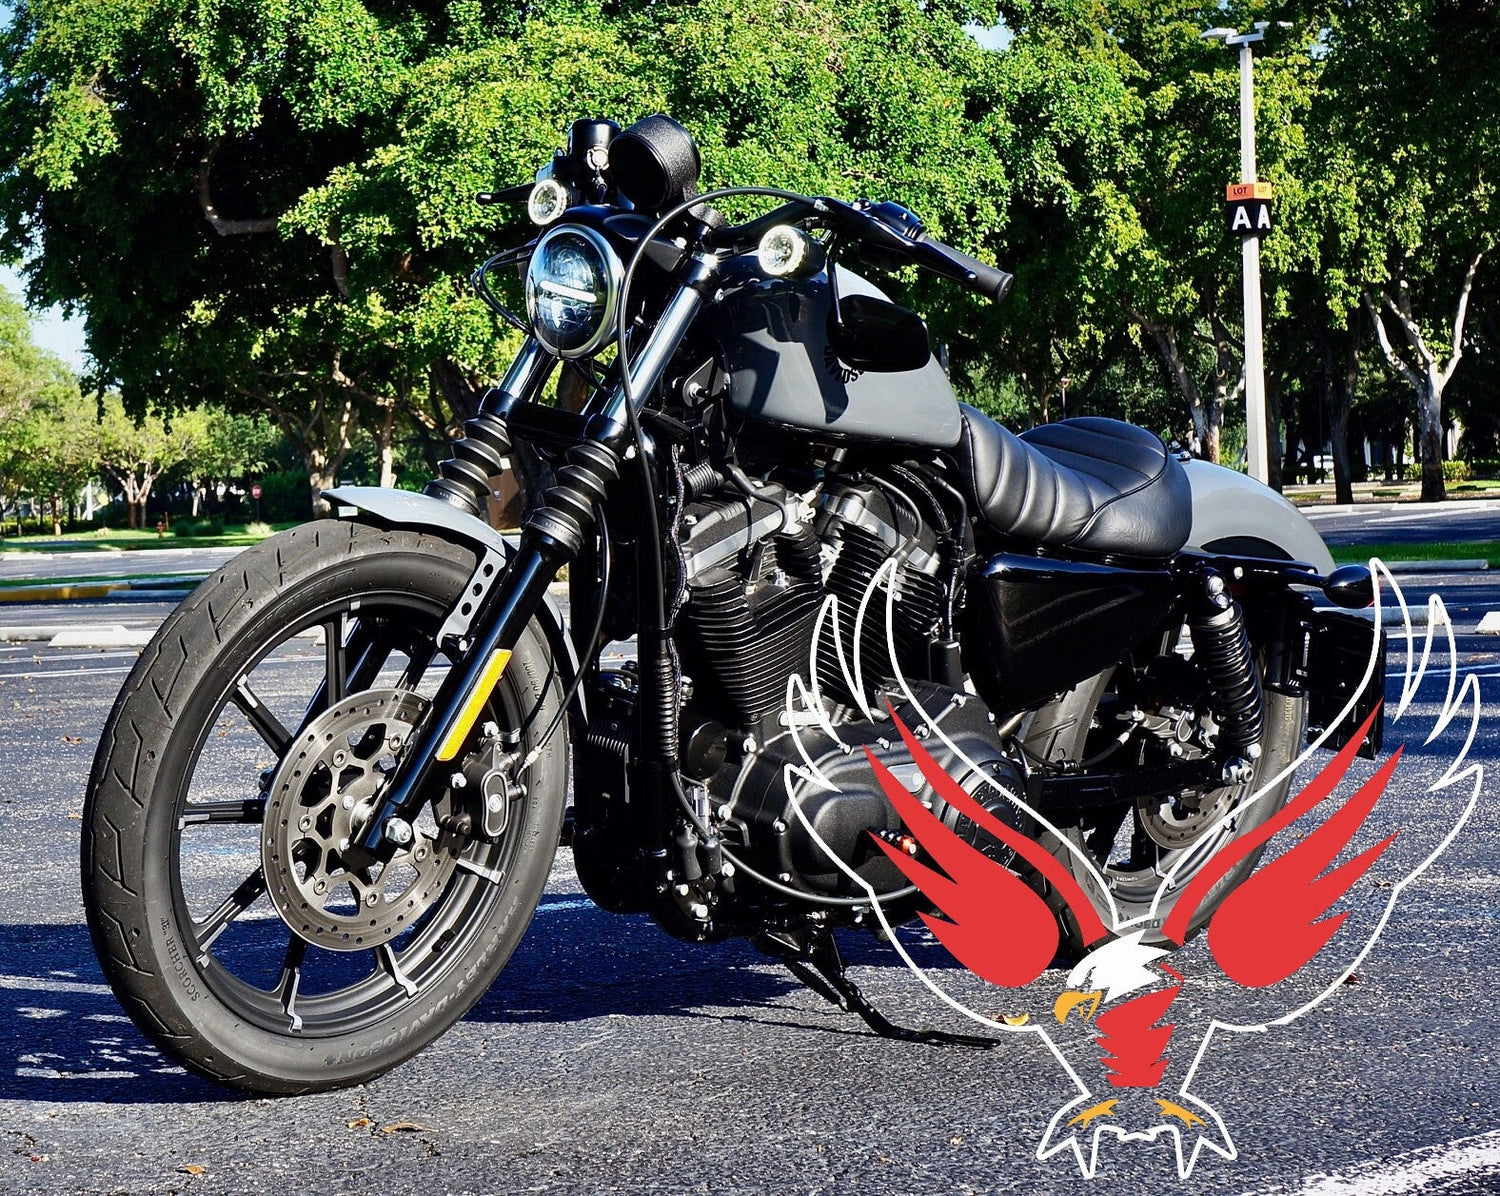 Eagle Lights' Cutting-Edge LED Headlight Options for Harley Davidson Sportster